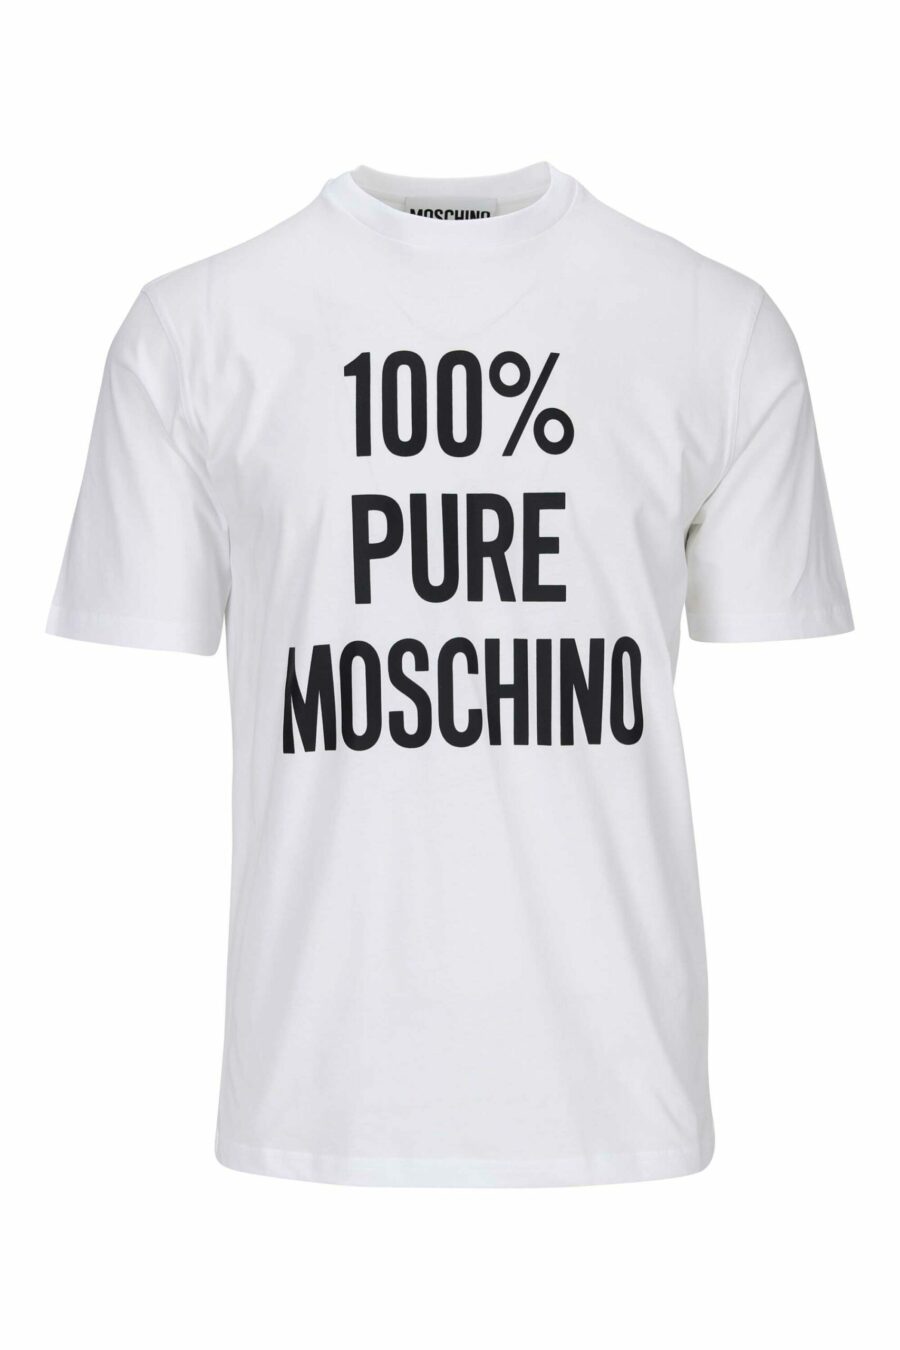 Camiseta blanca de algodón orgánico "100% pure moschino" - 667113764948 scaled